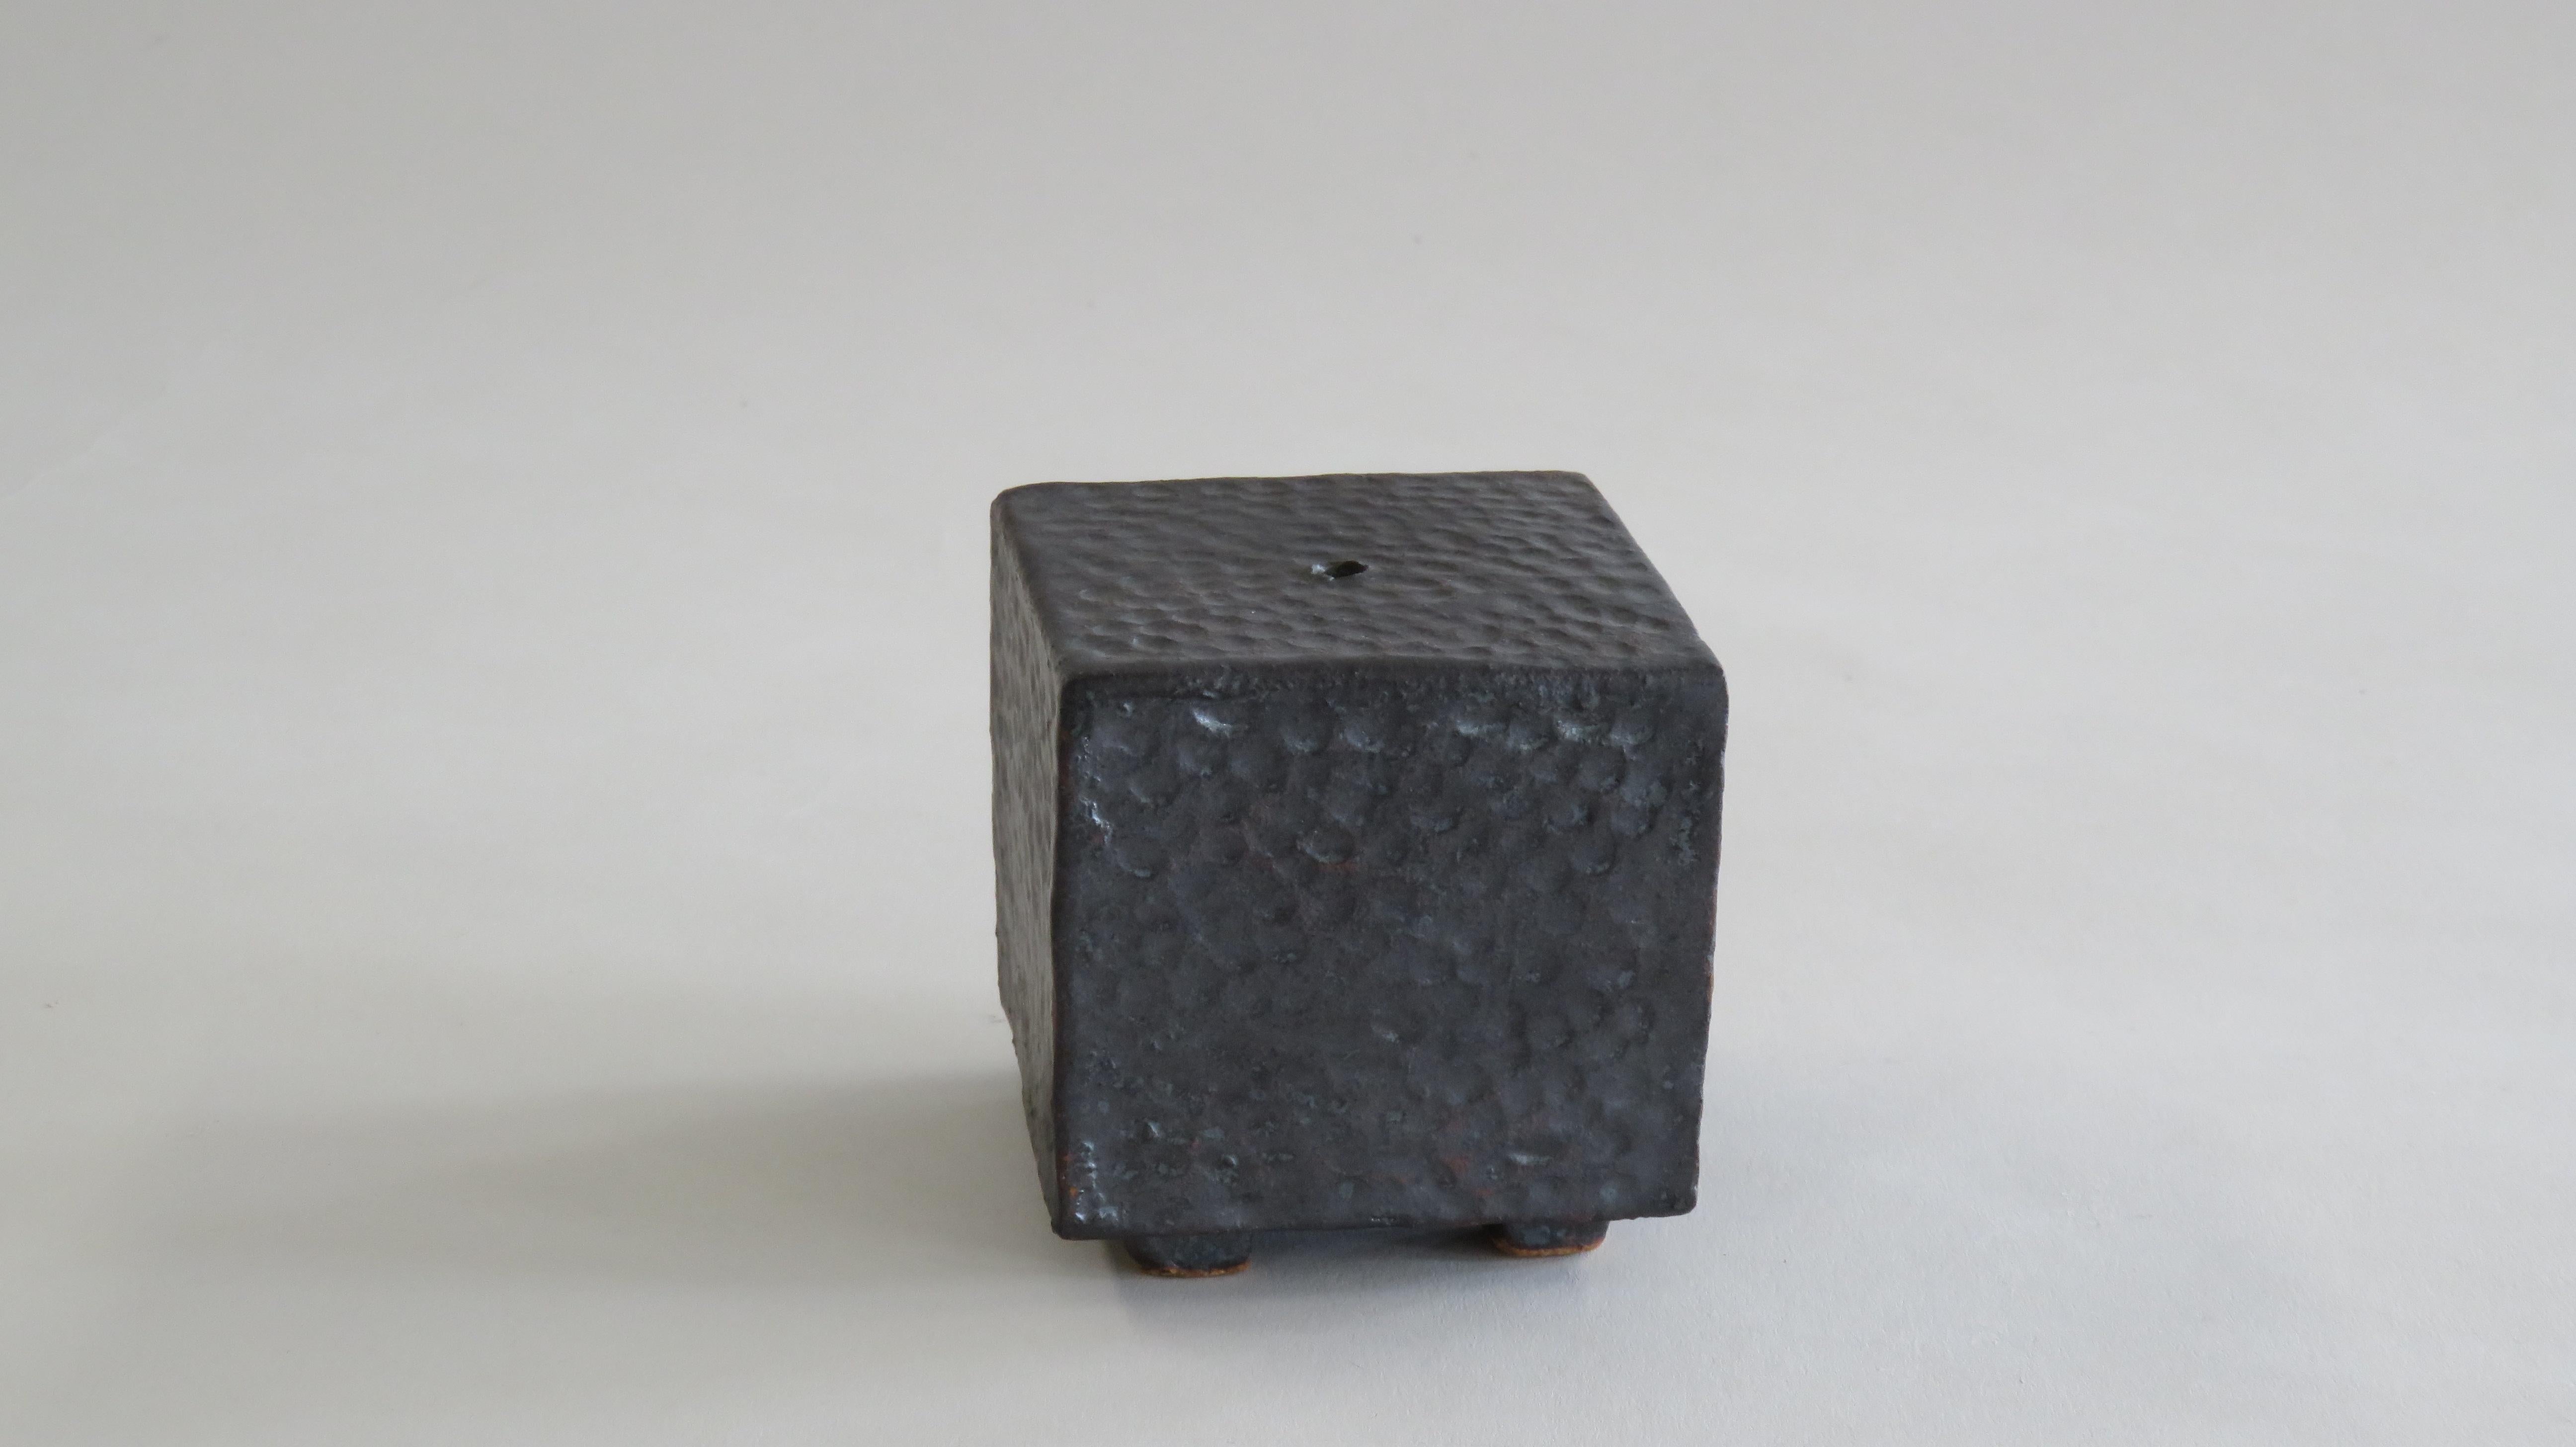 Organic Modern Small Ceramic Contemplation Cube, Mottled Surface in Metallic Black-Brown Glaze